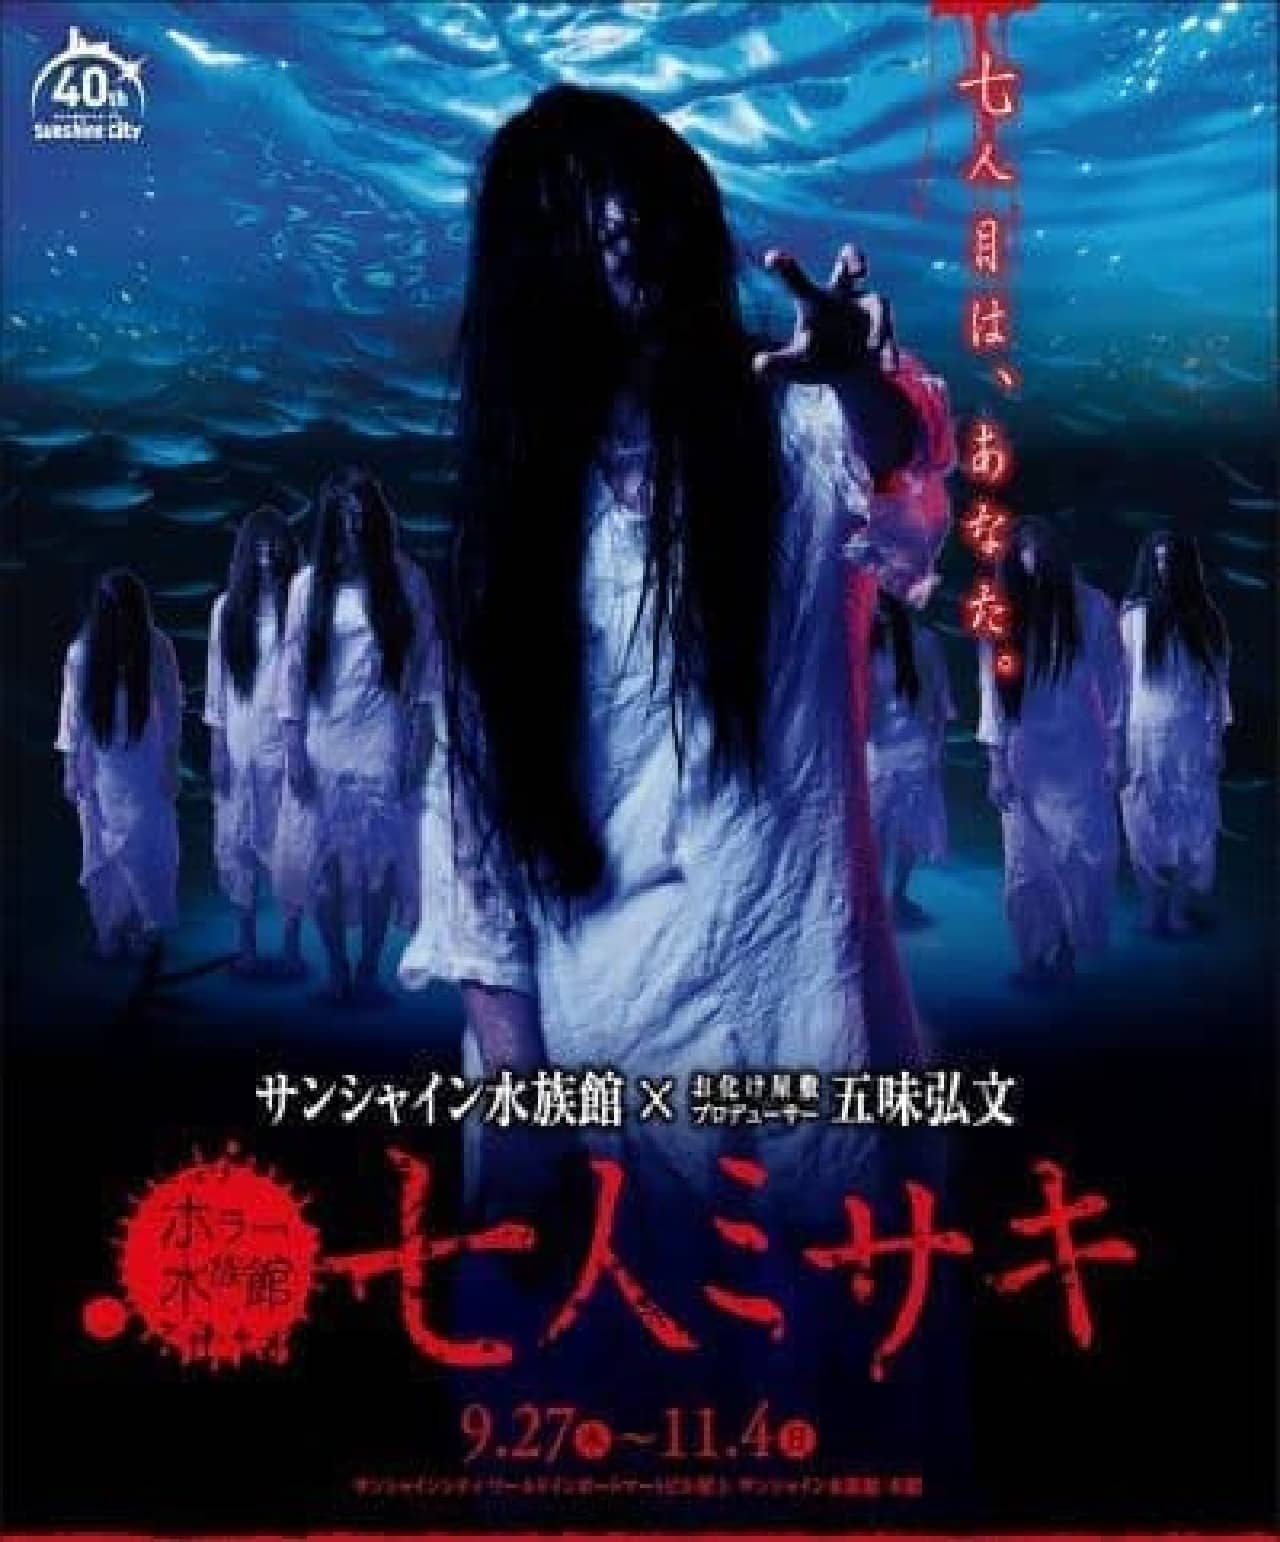 Horror aquarium "Shichinin Misaki" at Sunshine, "Horror menu" at Canaloa Cafe